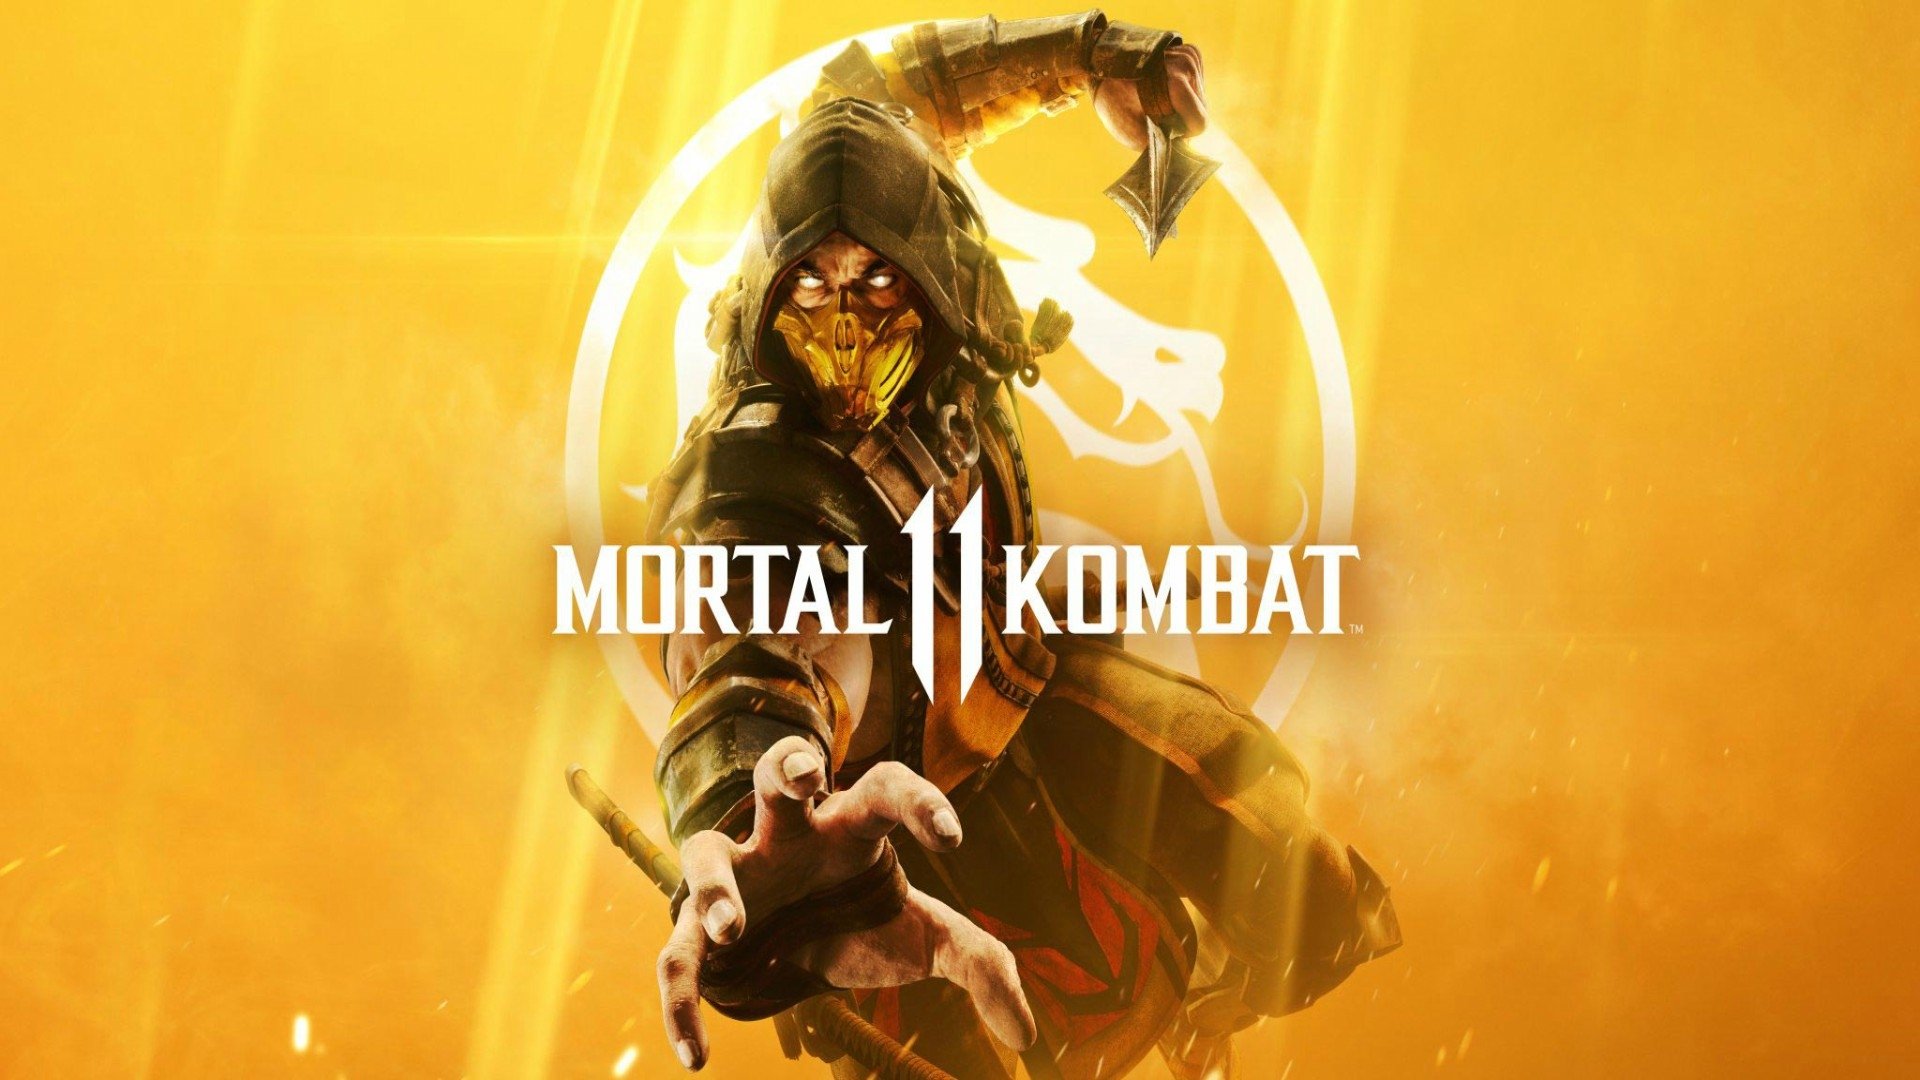 Mortal Kombat 11 Official Wallpaper download